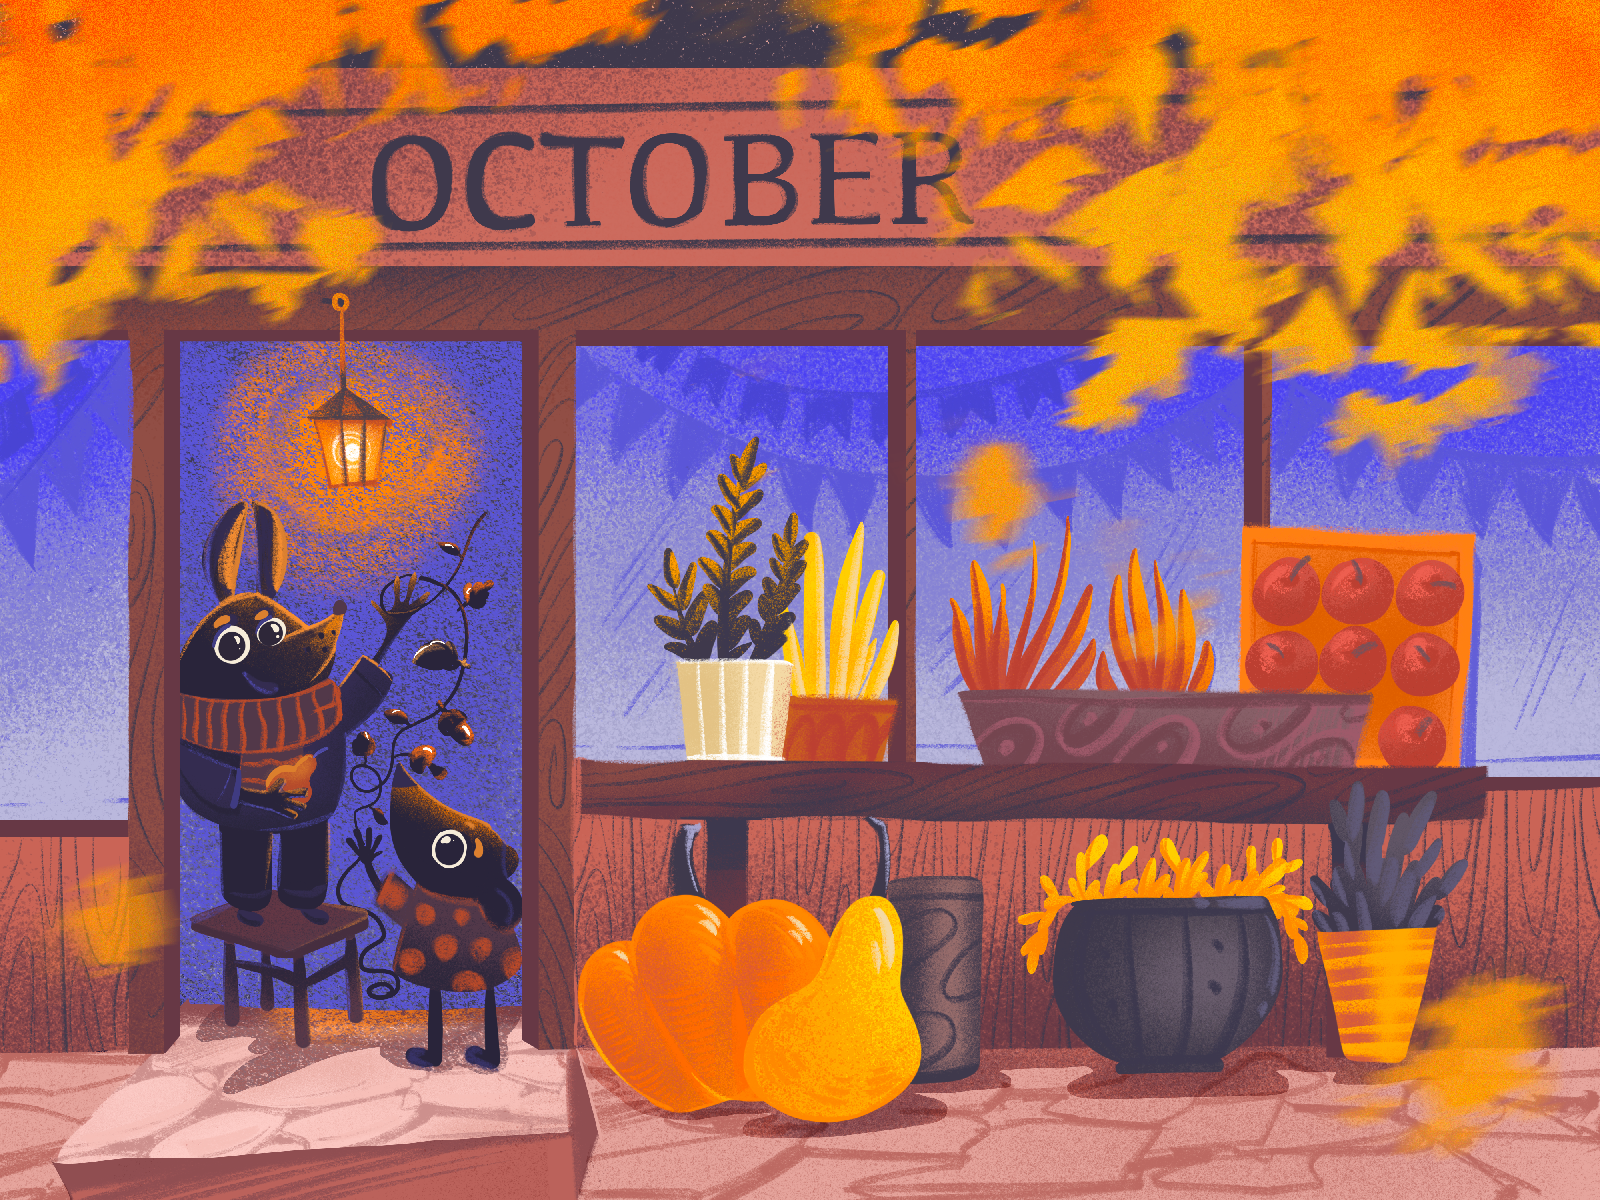 Cozy October Illustration by tubik.arts on Dribbble